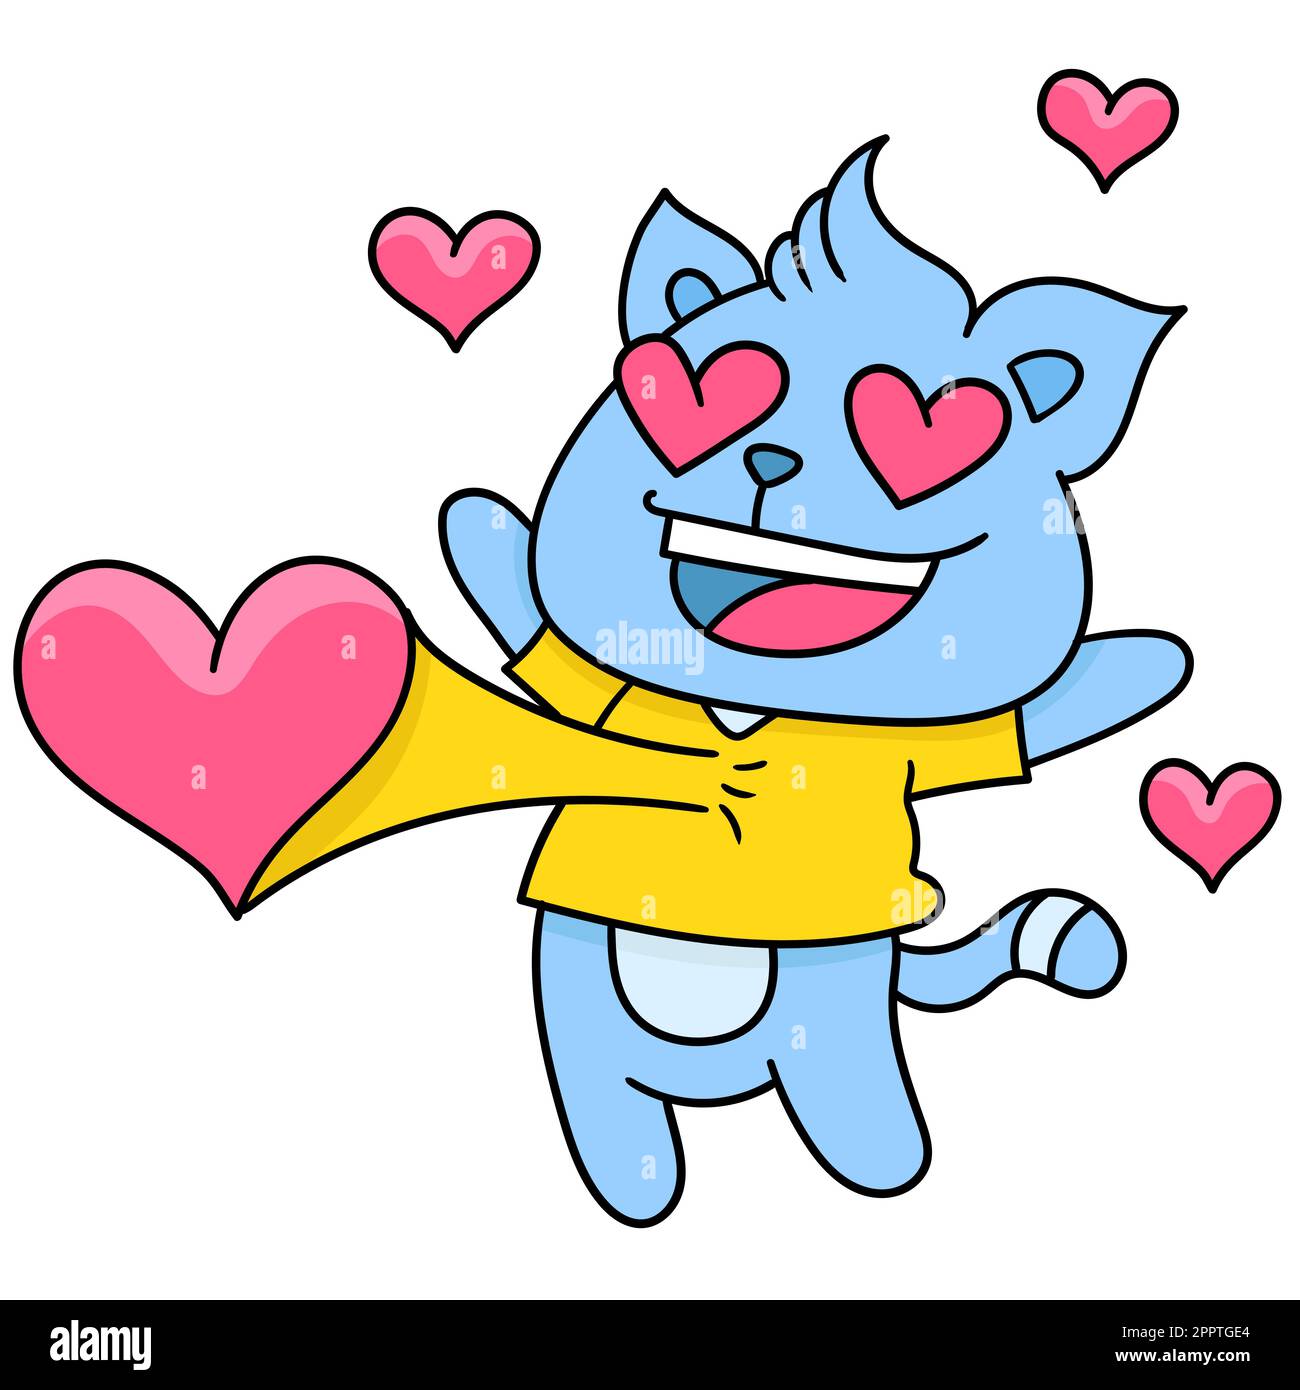 cartoon cat creature is admiring in love, doodle icon image Stock Vector